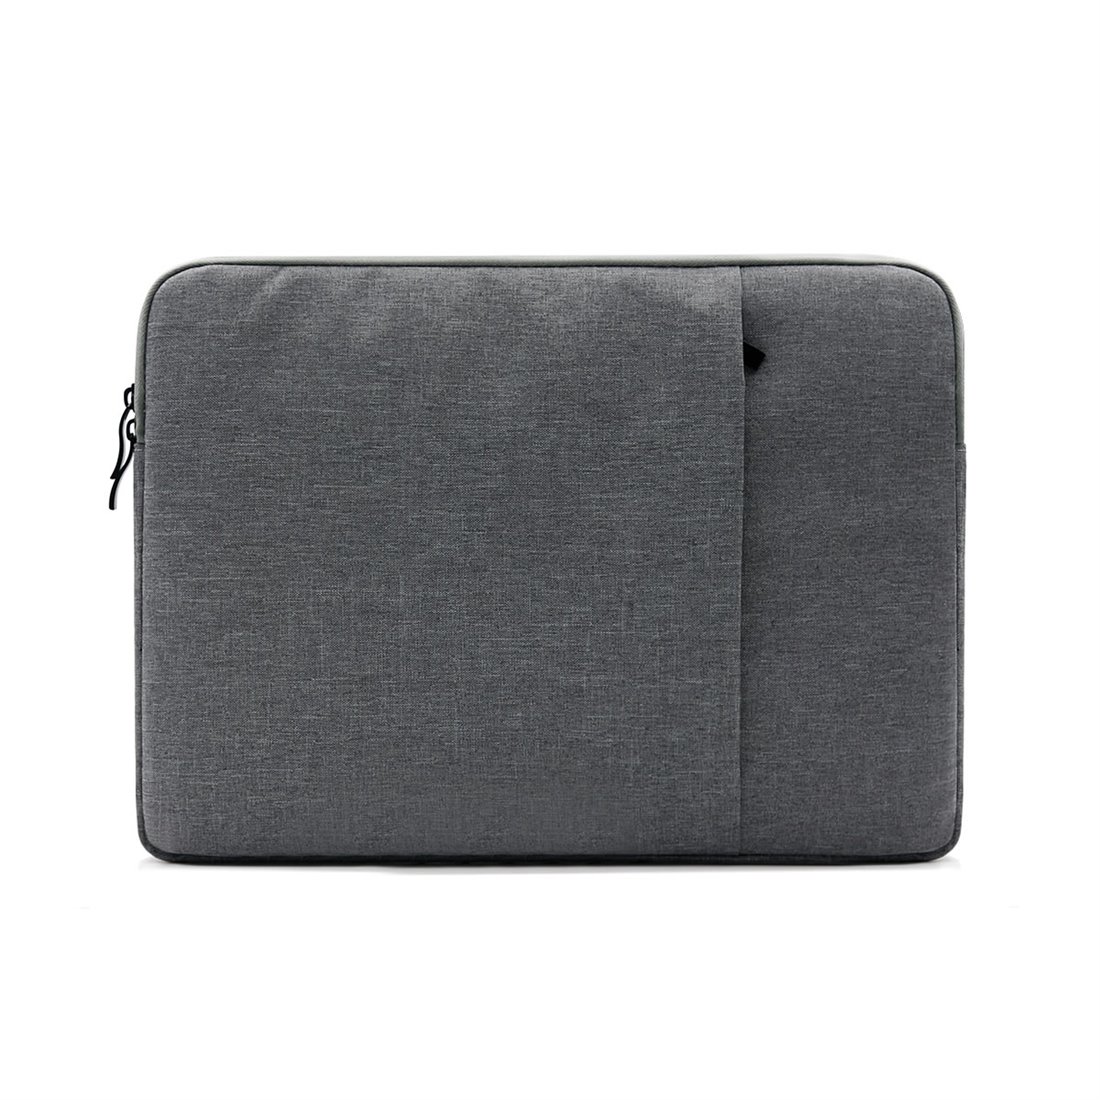 11.6 inch universal Laptop sleeve/ bag DG